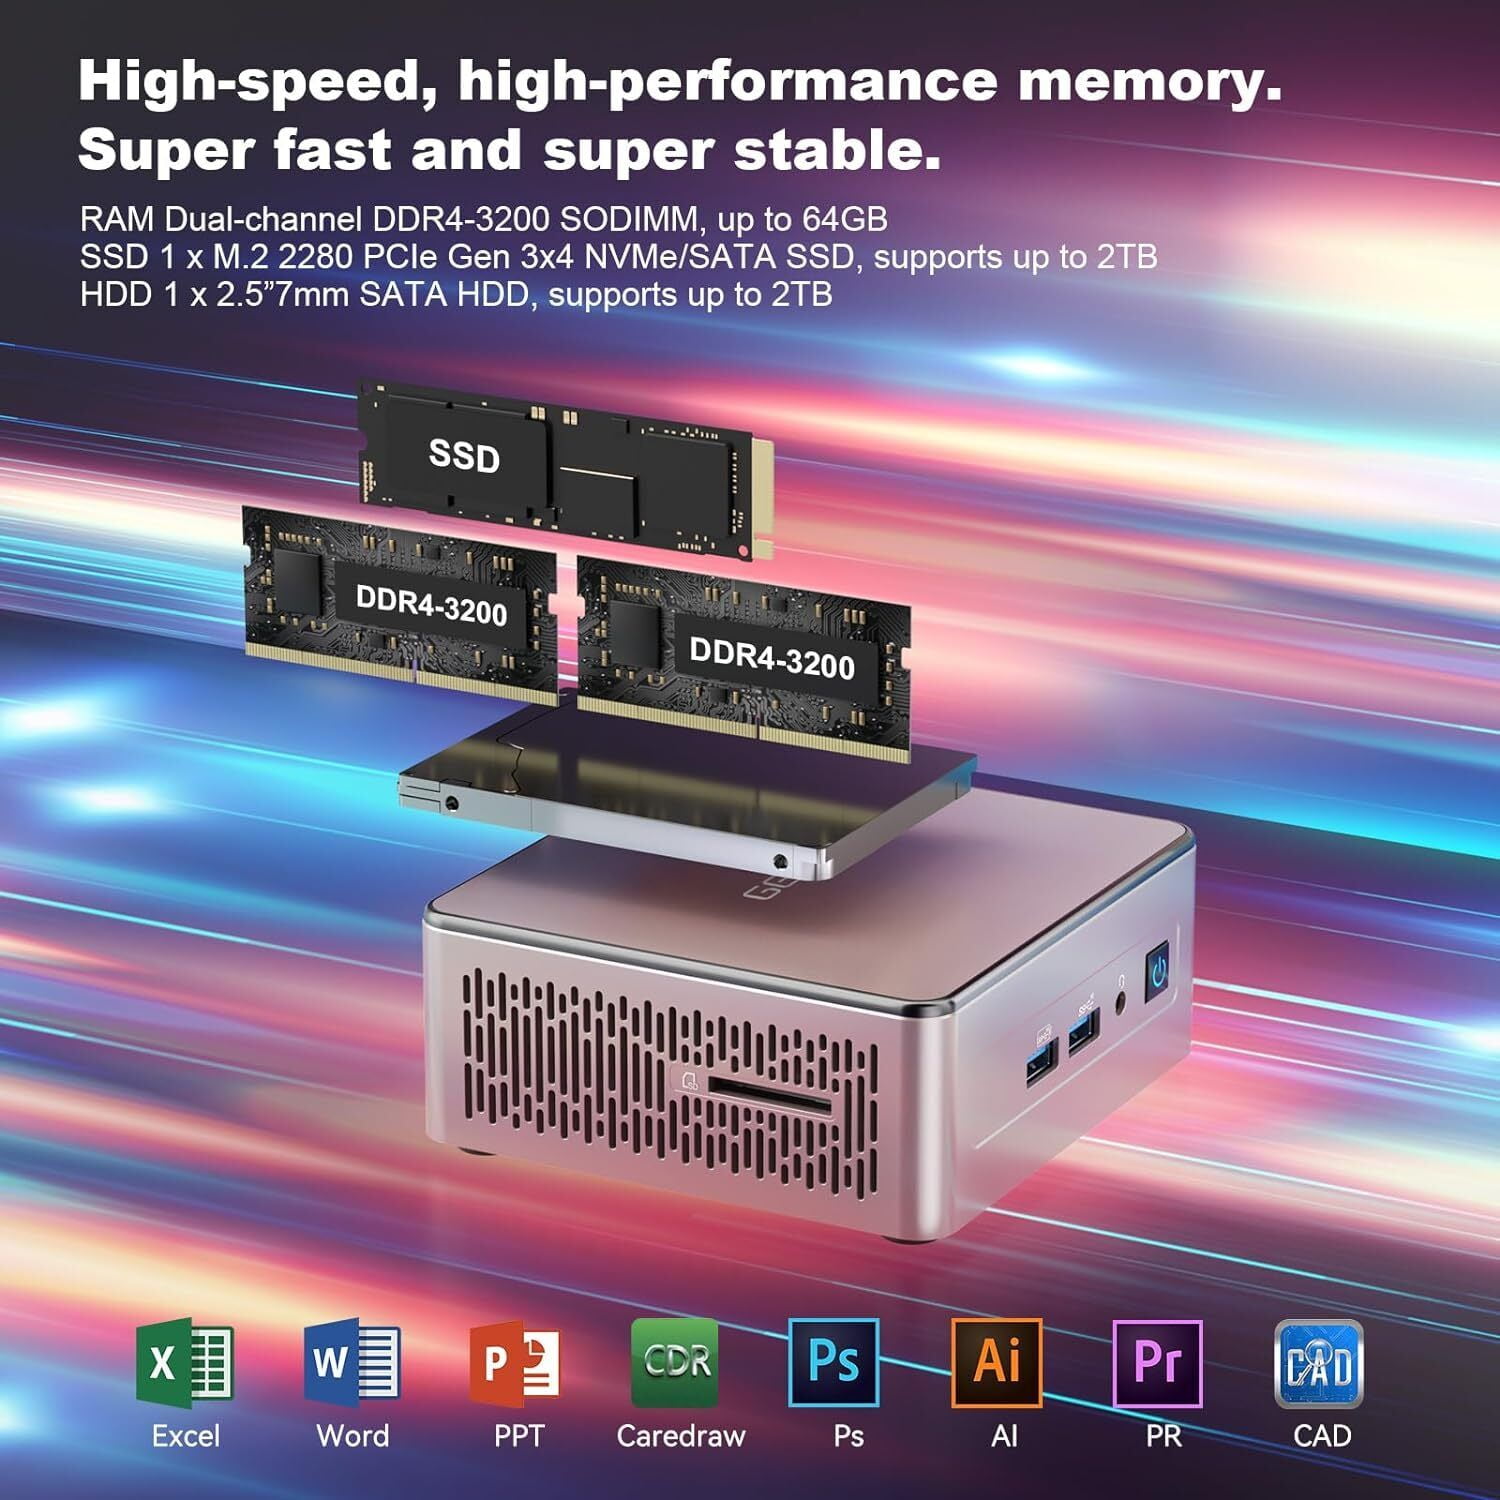 GEEKOM A5 Mini PC, AMD Ryzen 7 5800H(8C/16T, up to 4.4GHz), 32GB